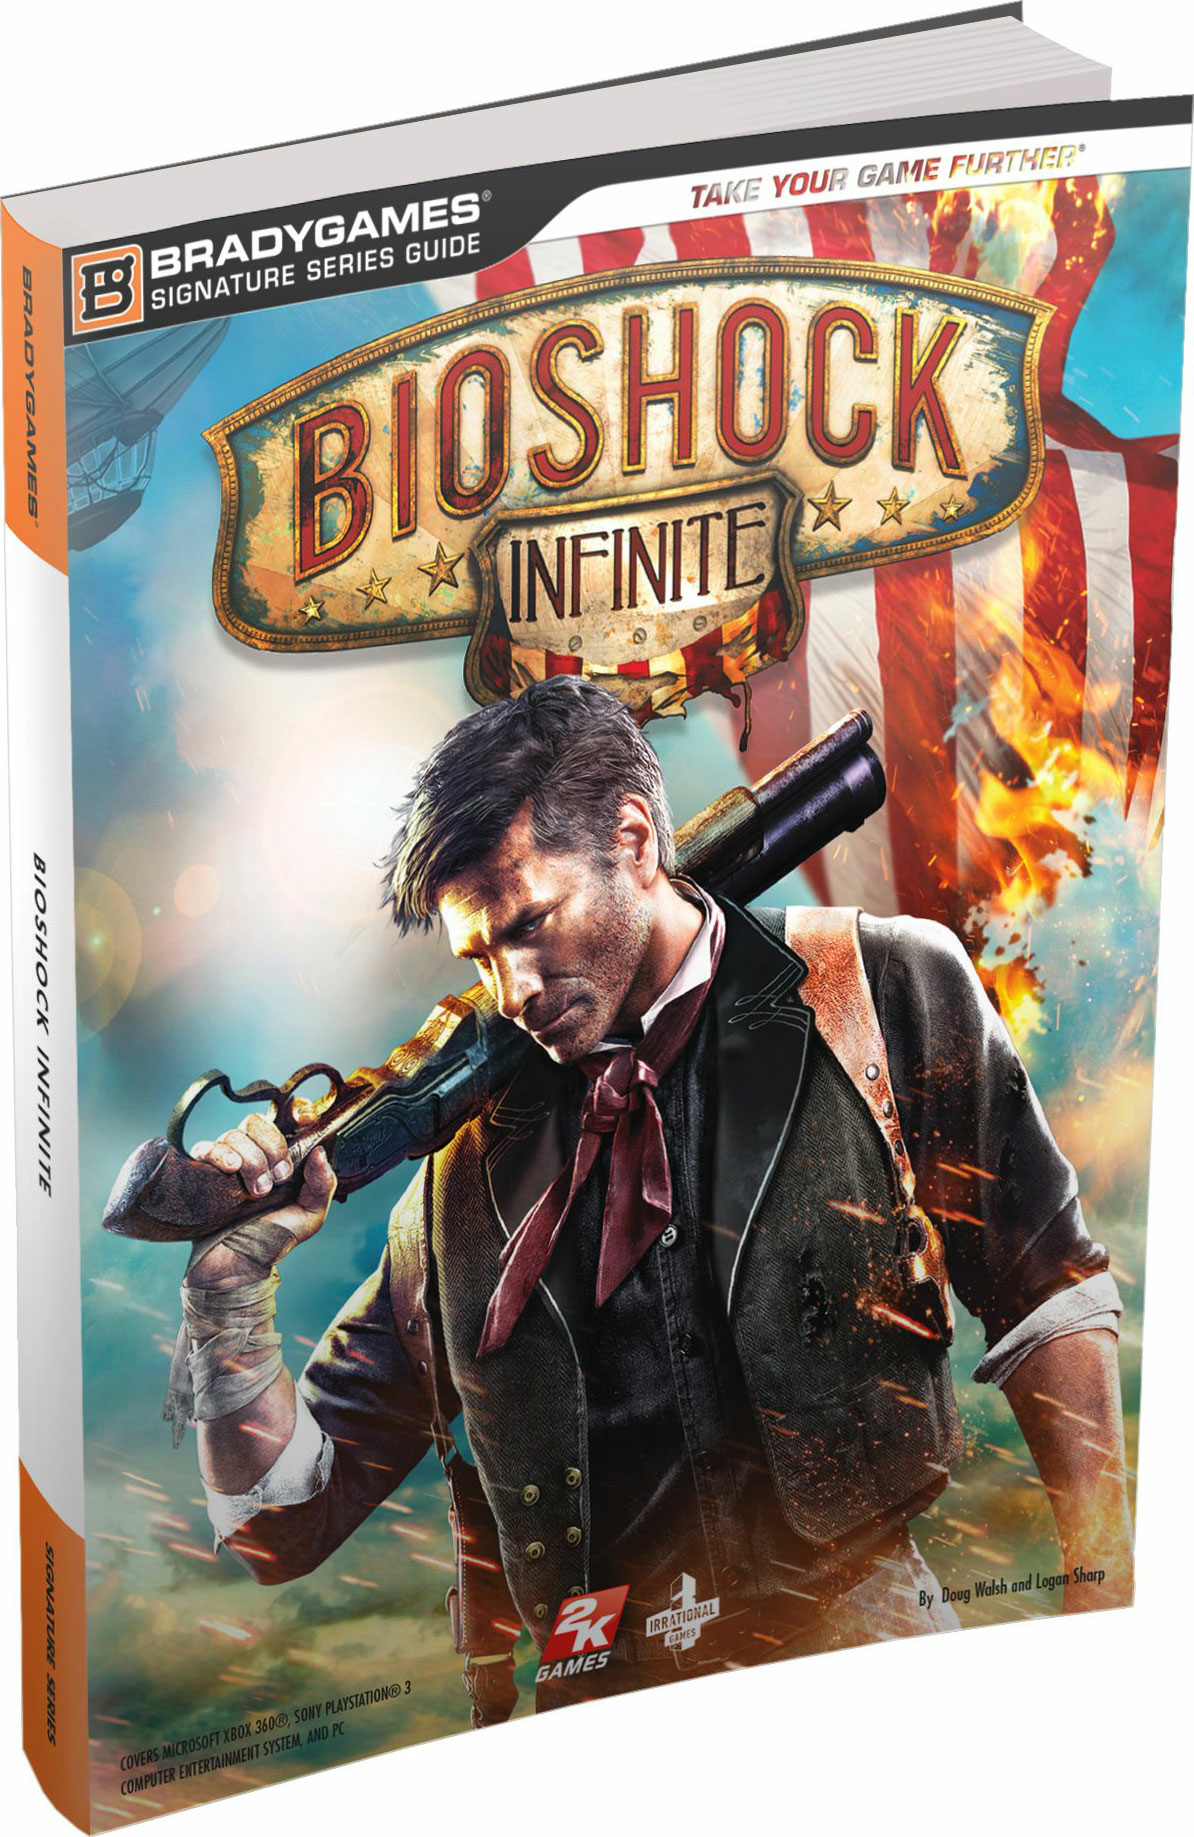 bioshock infinite complete edition